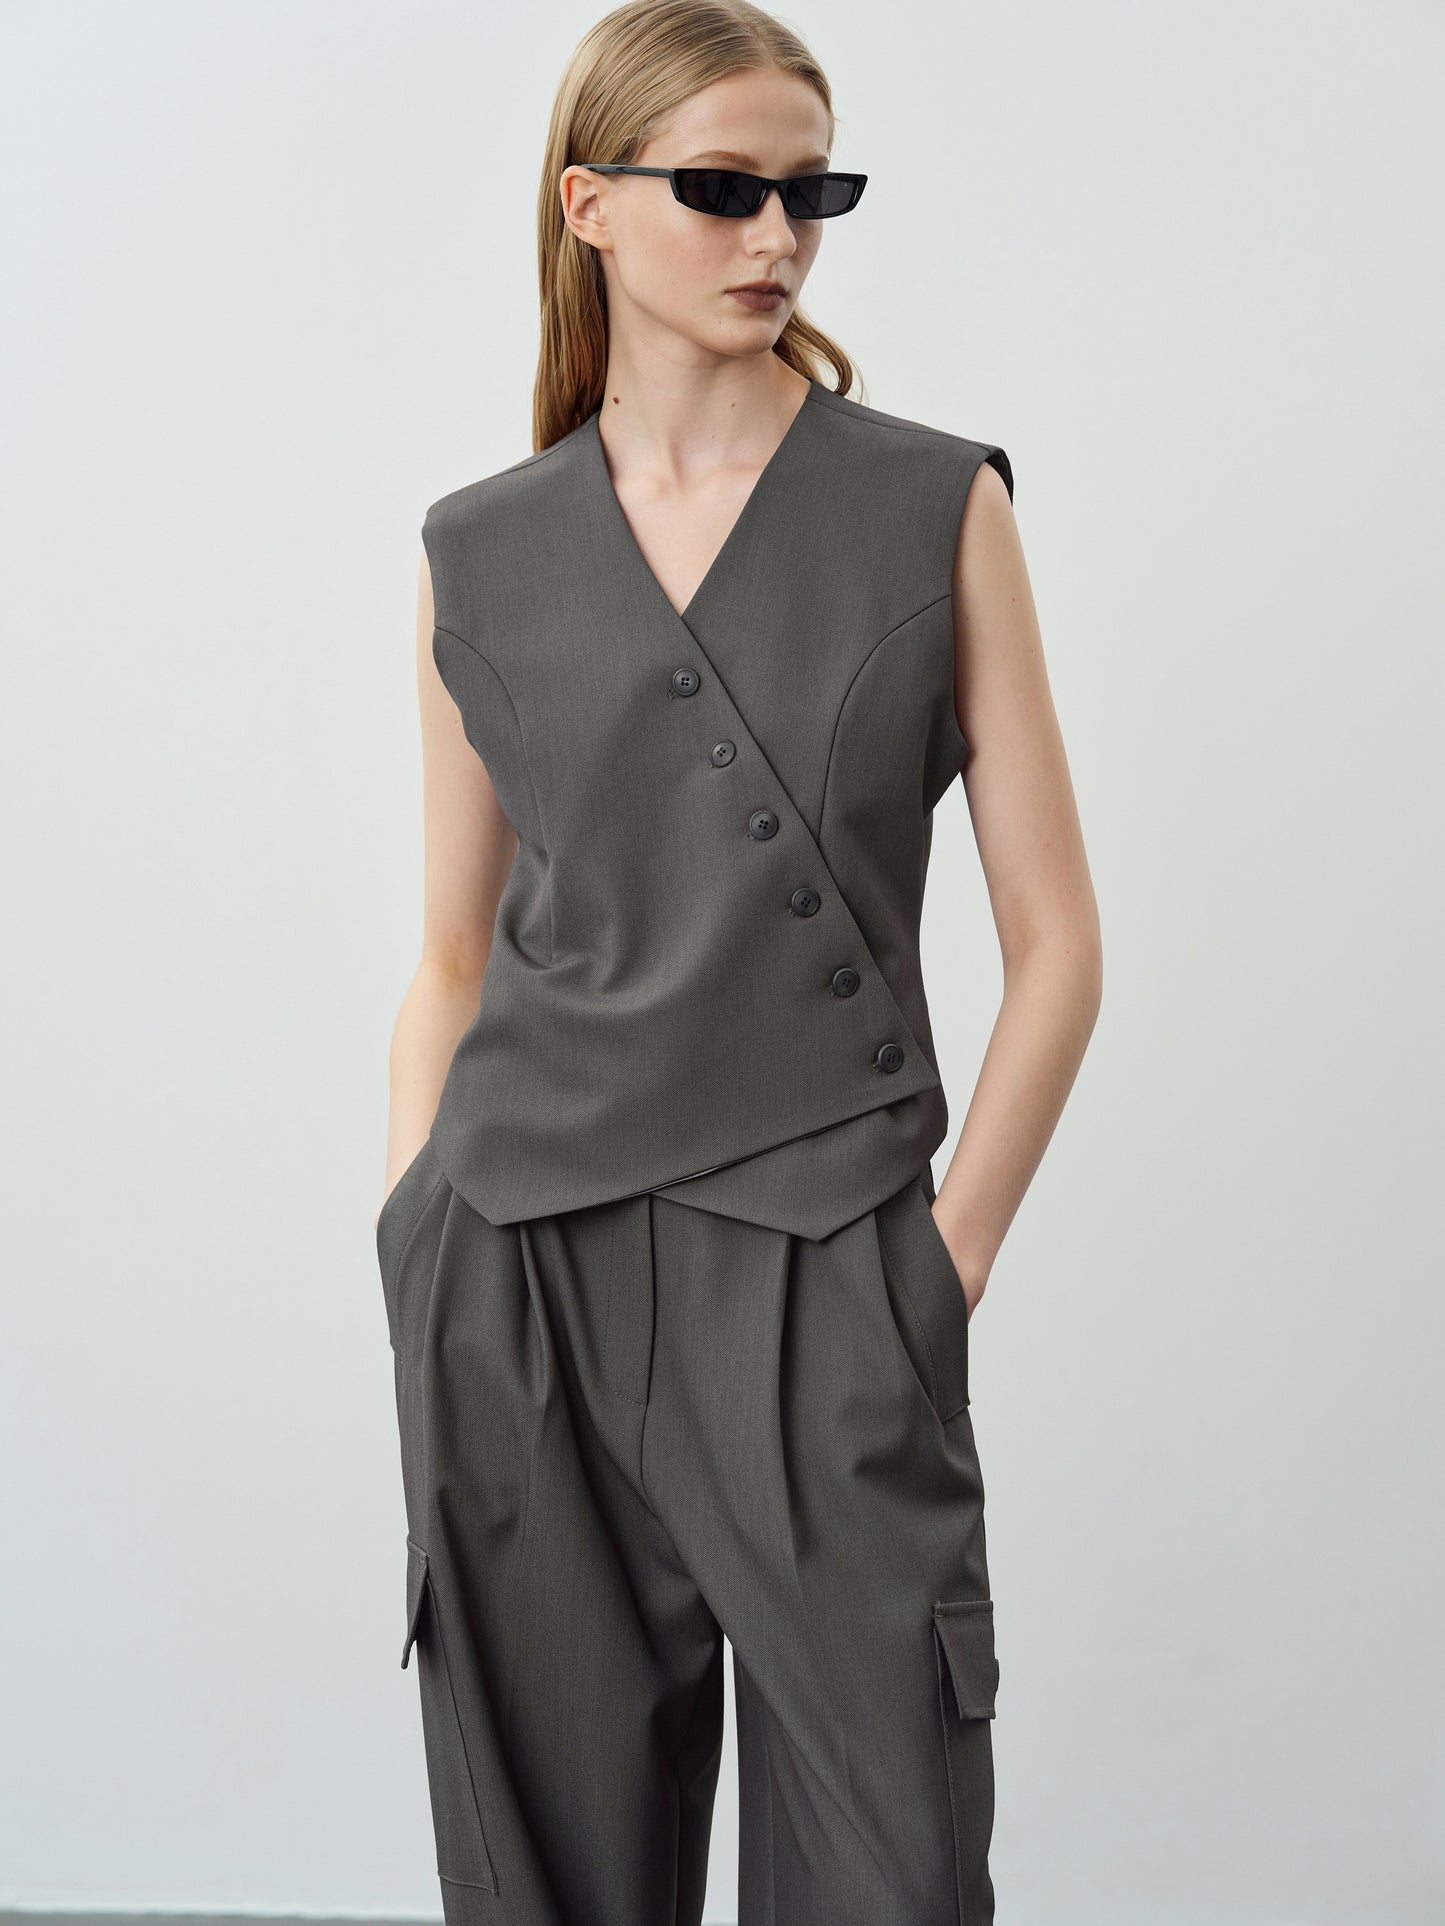 AON WOMEN'S CLASSIC VEST - CHARCOAL GREY - AonActivewear